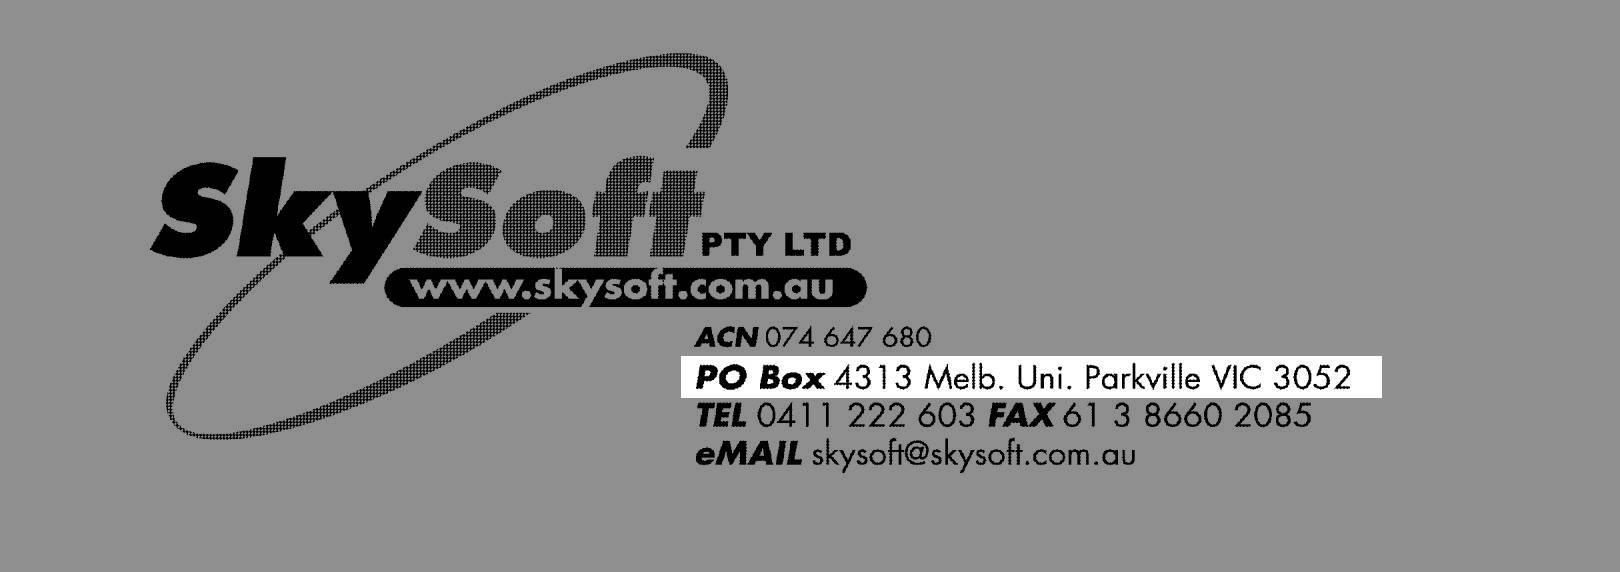 Skysoft, letterhead